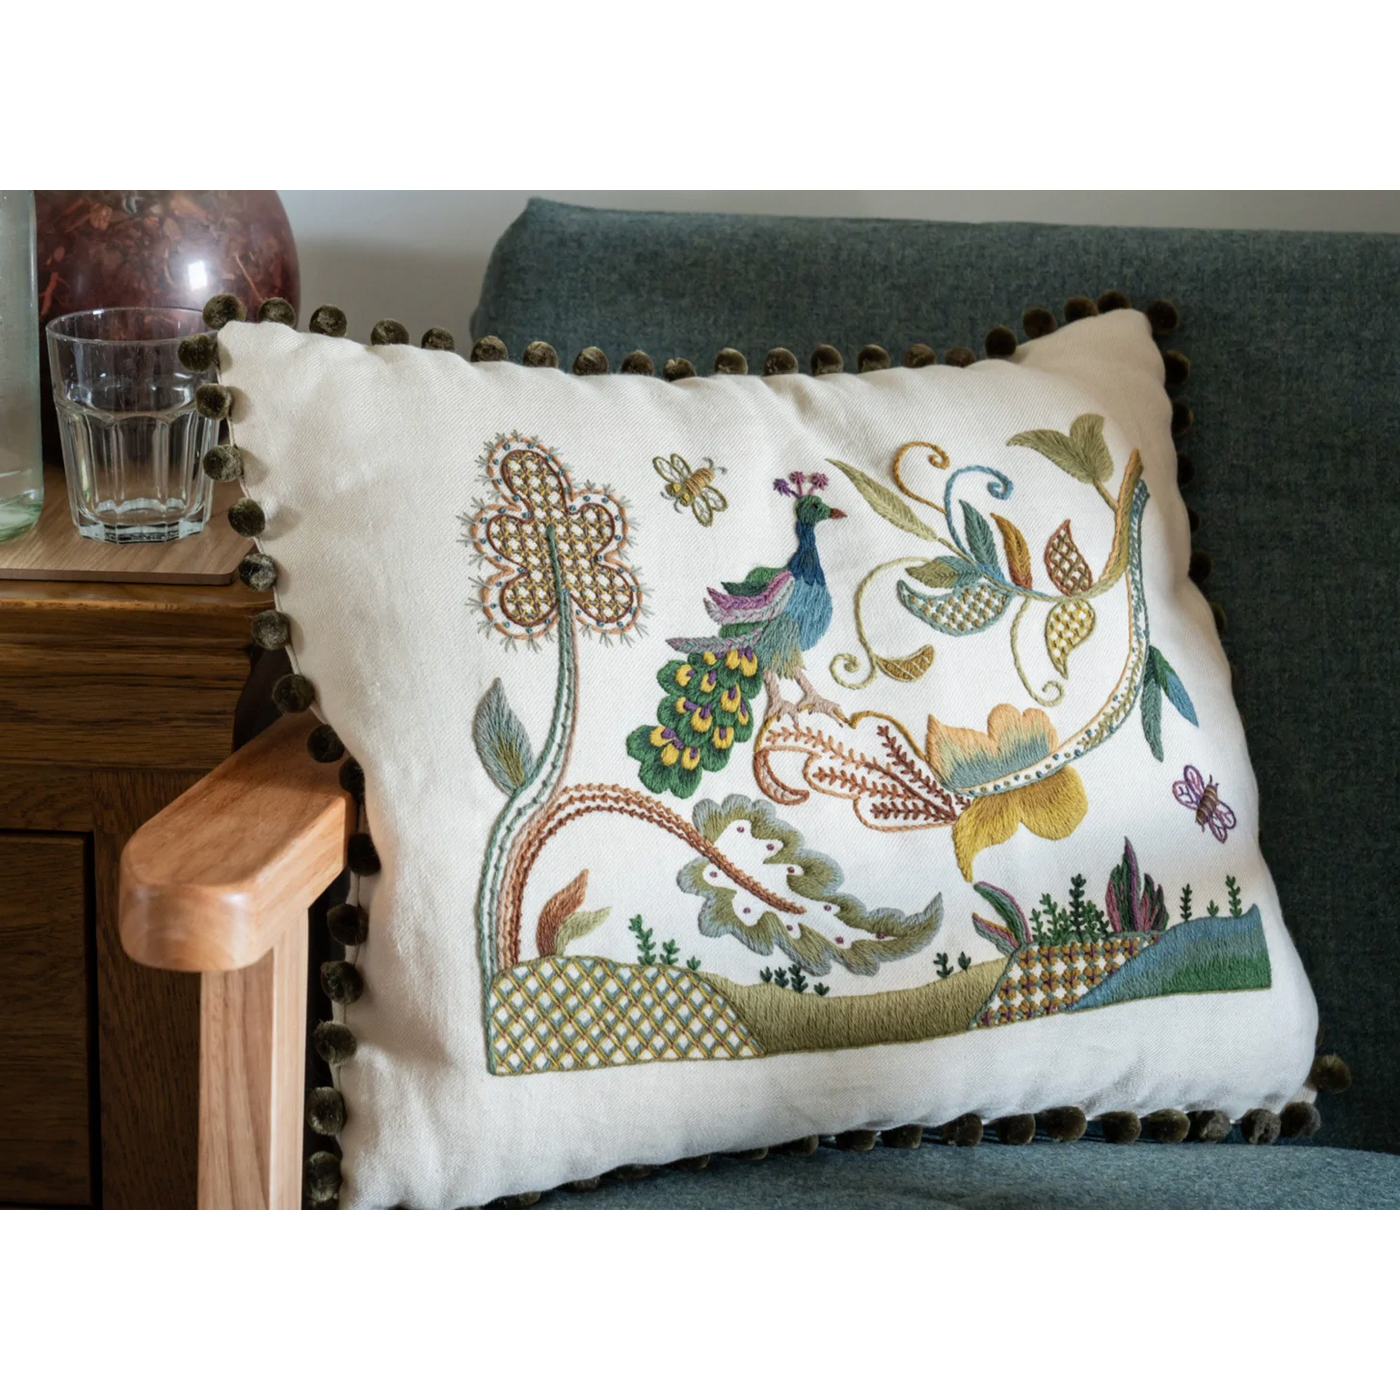 Embroidery & Crewel Kits